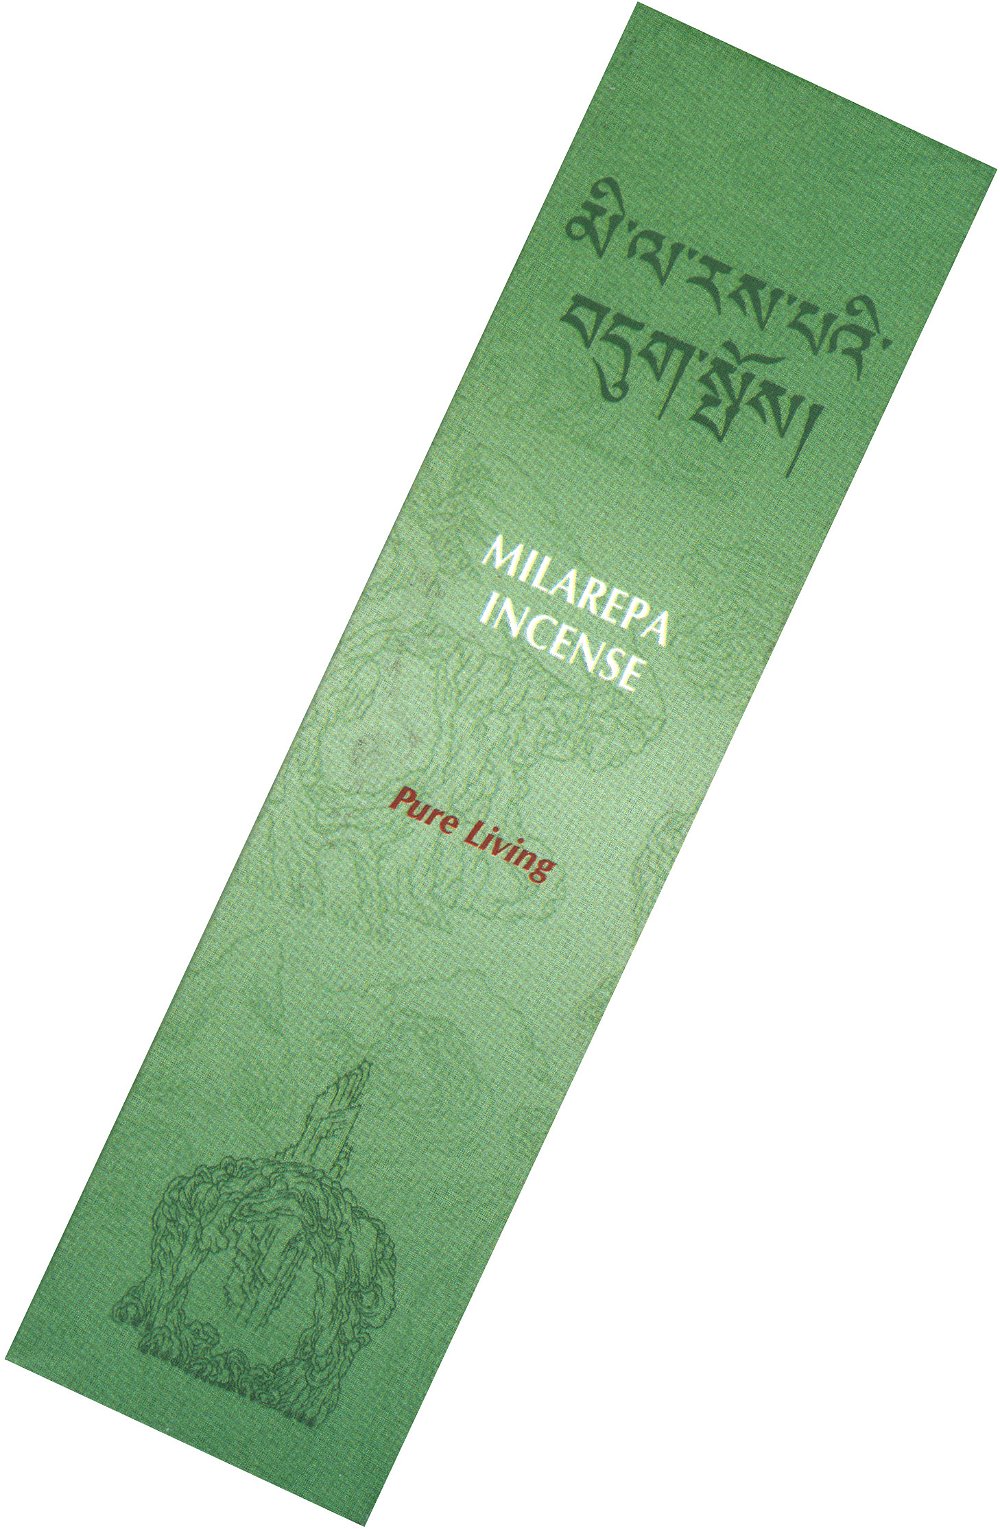 Благовоние Milarepa Incense (Миларепа), 20 палочек по 14 см, 20, Миларепа